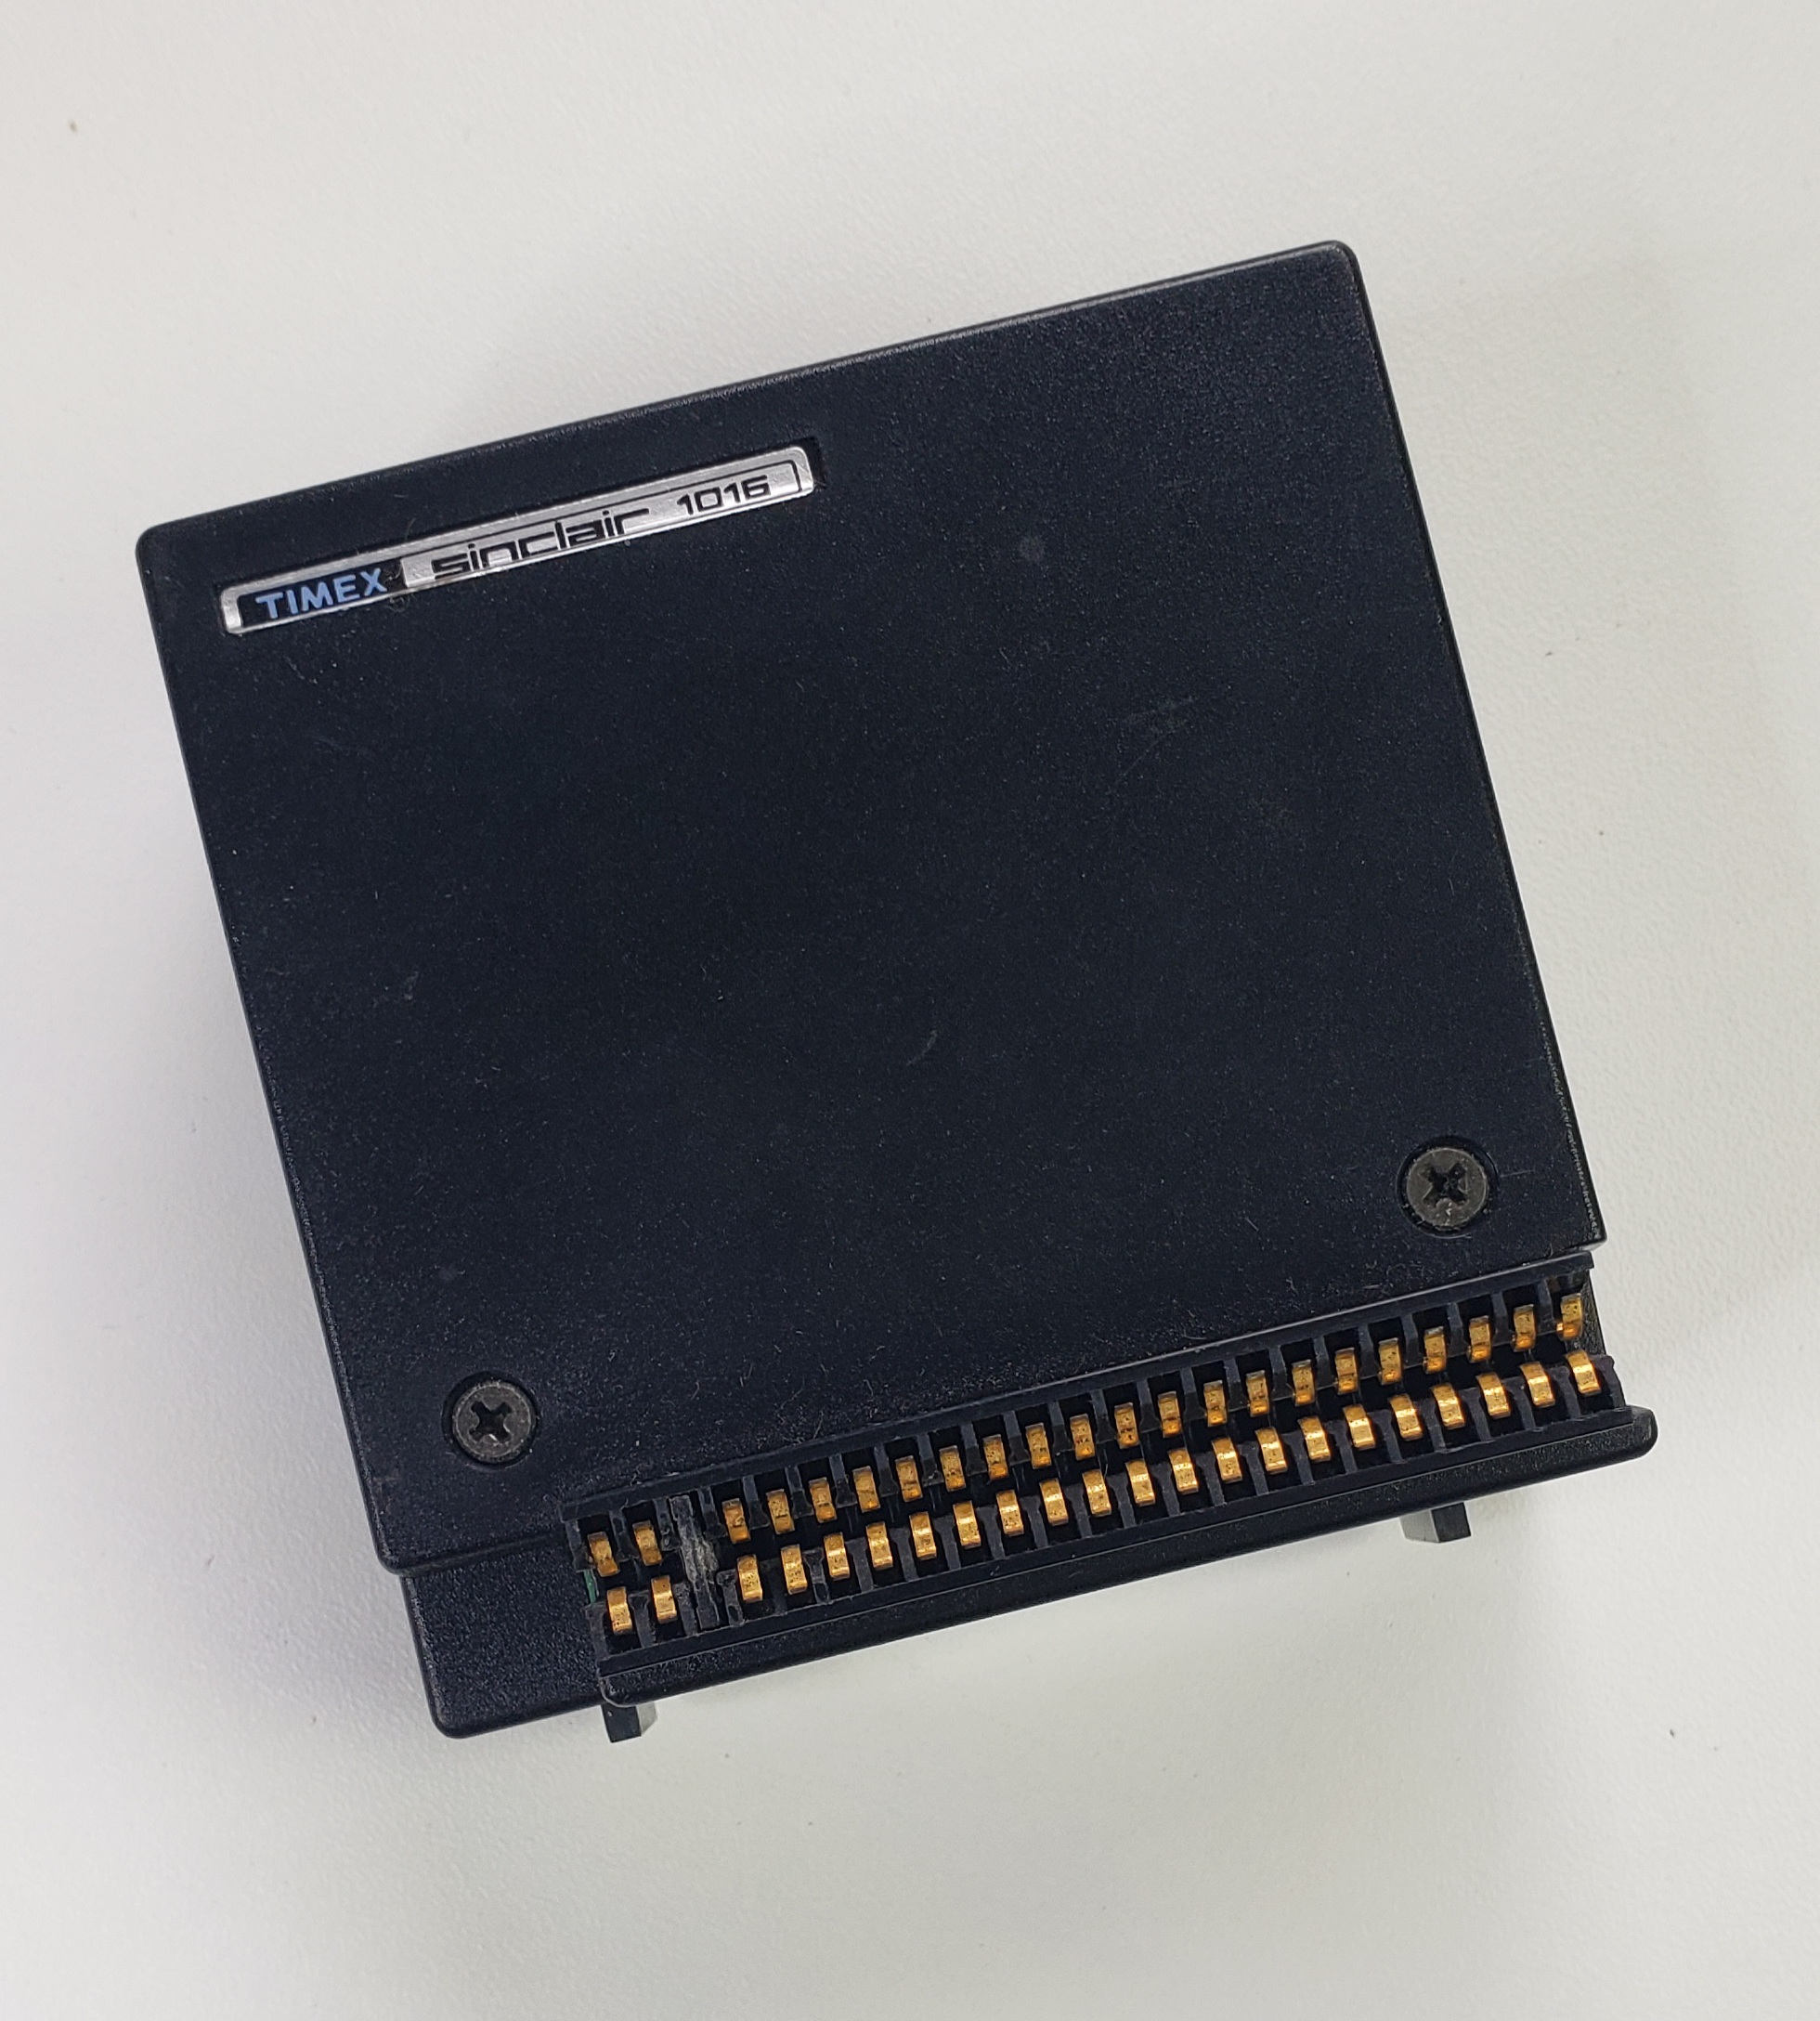 Timex Sinclair TS-1016: P251046HO - Expansión